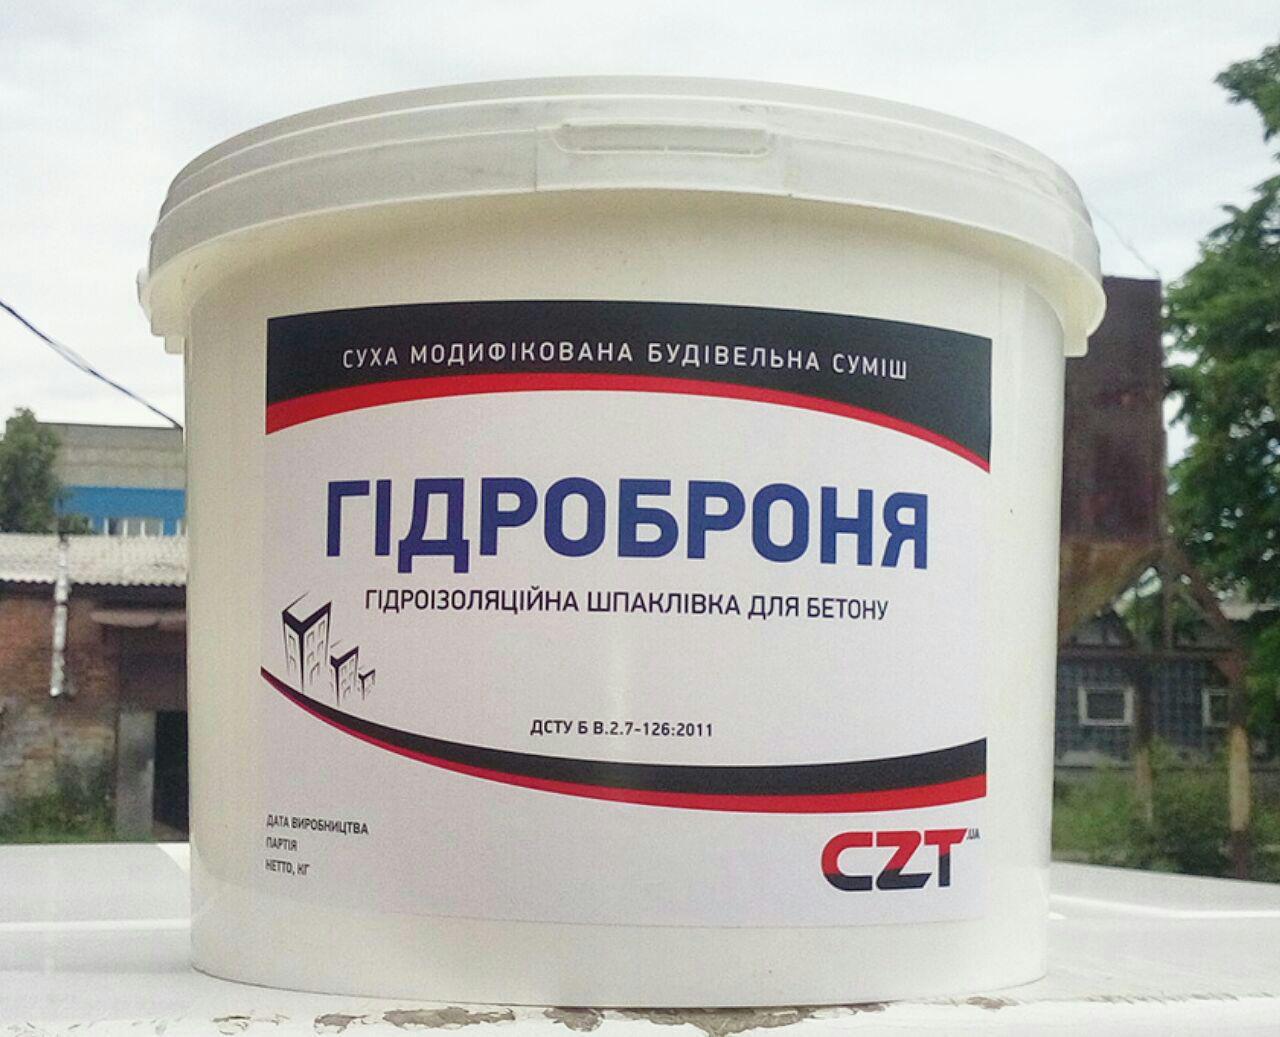 

ГидроБроня (Серый) Гидроизоляция для бетона 5кг